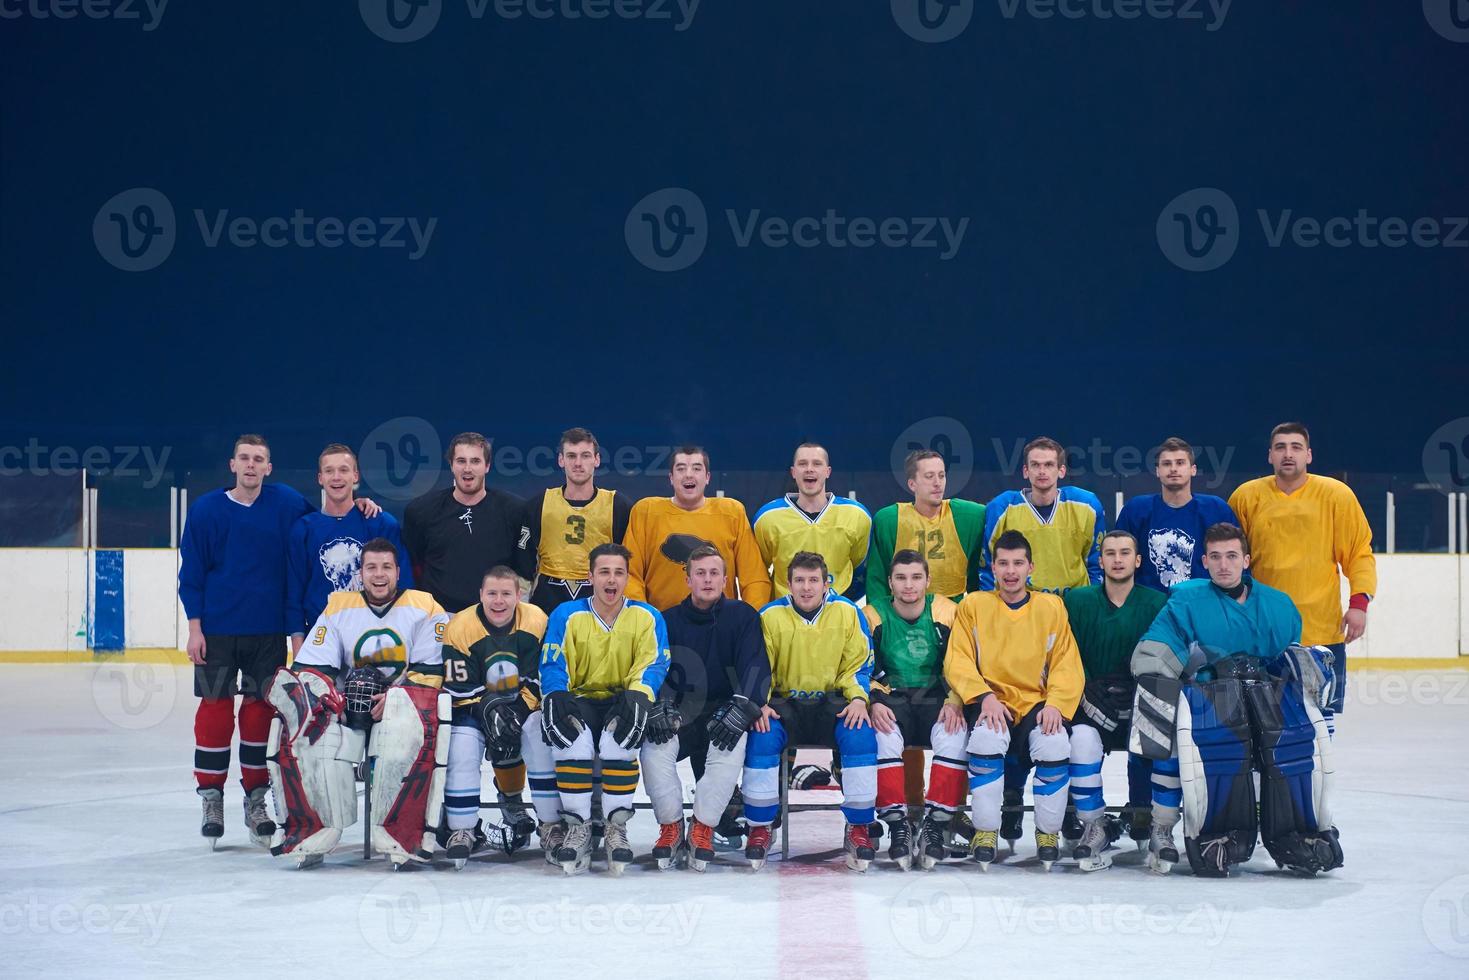 ijs hockey spelers team portret foto